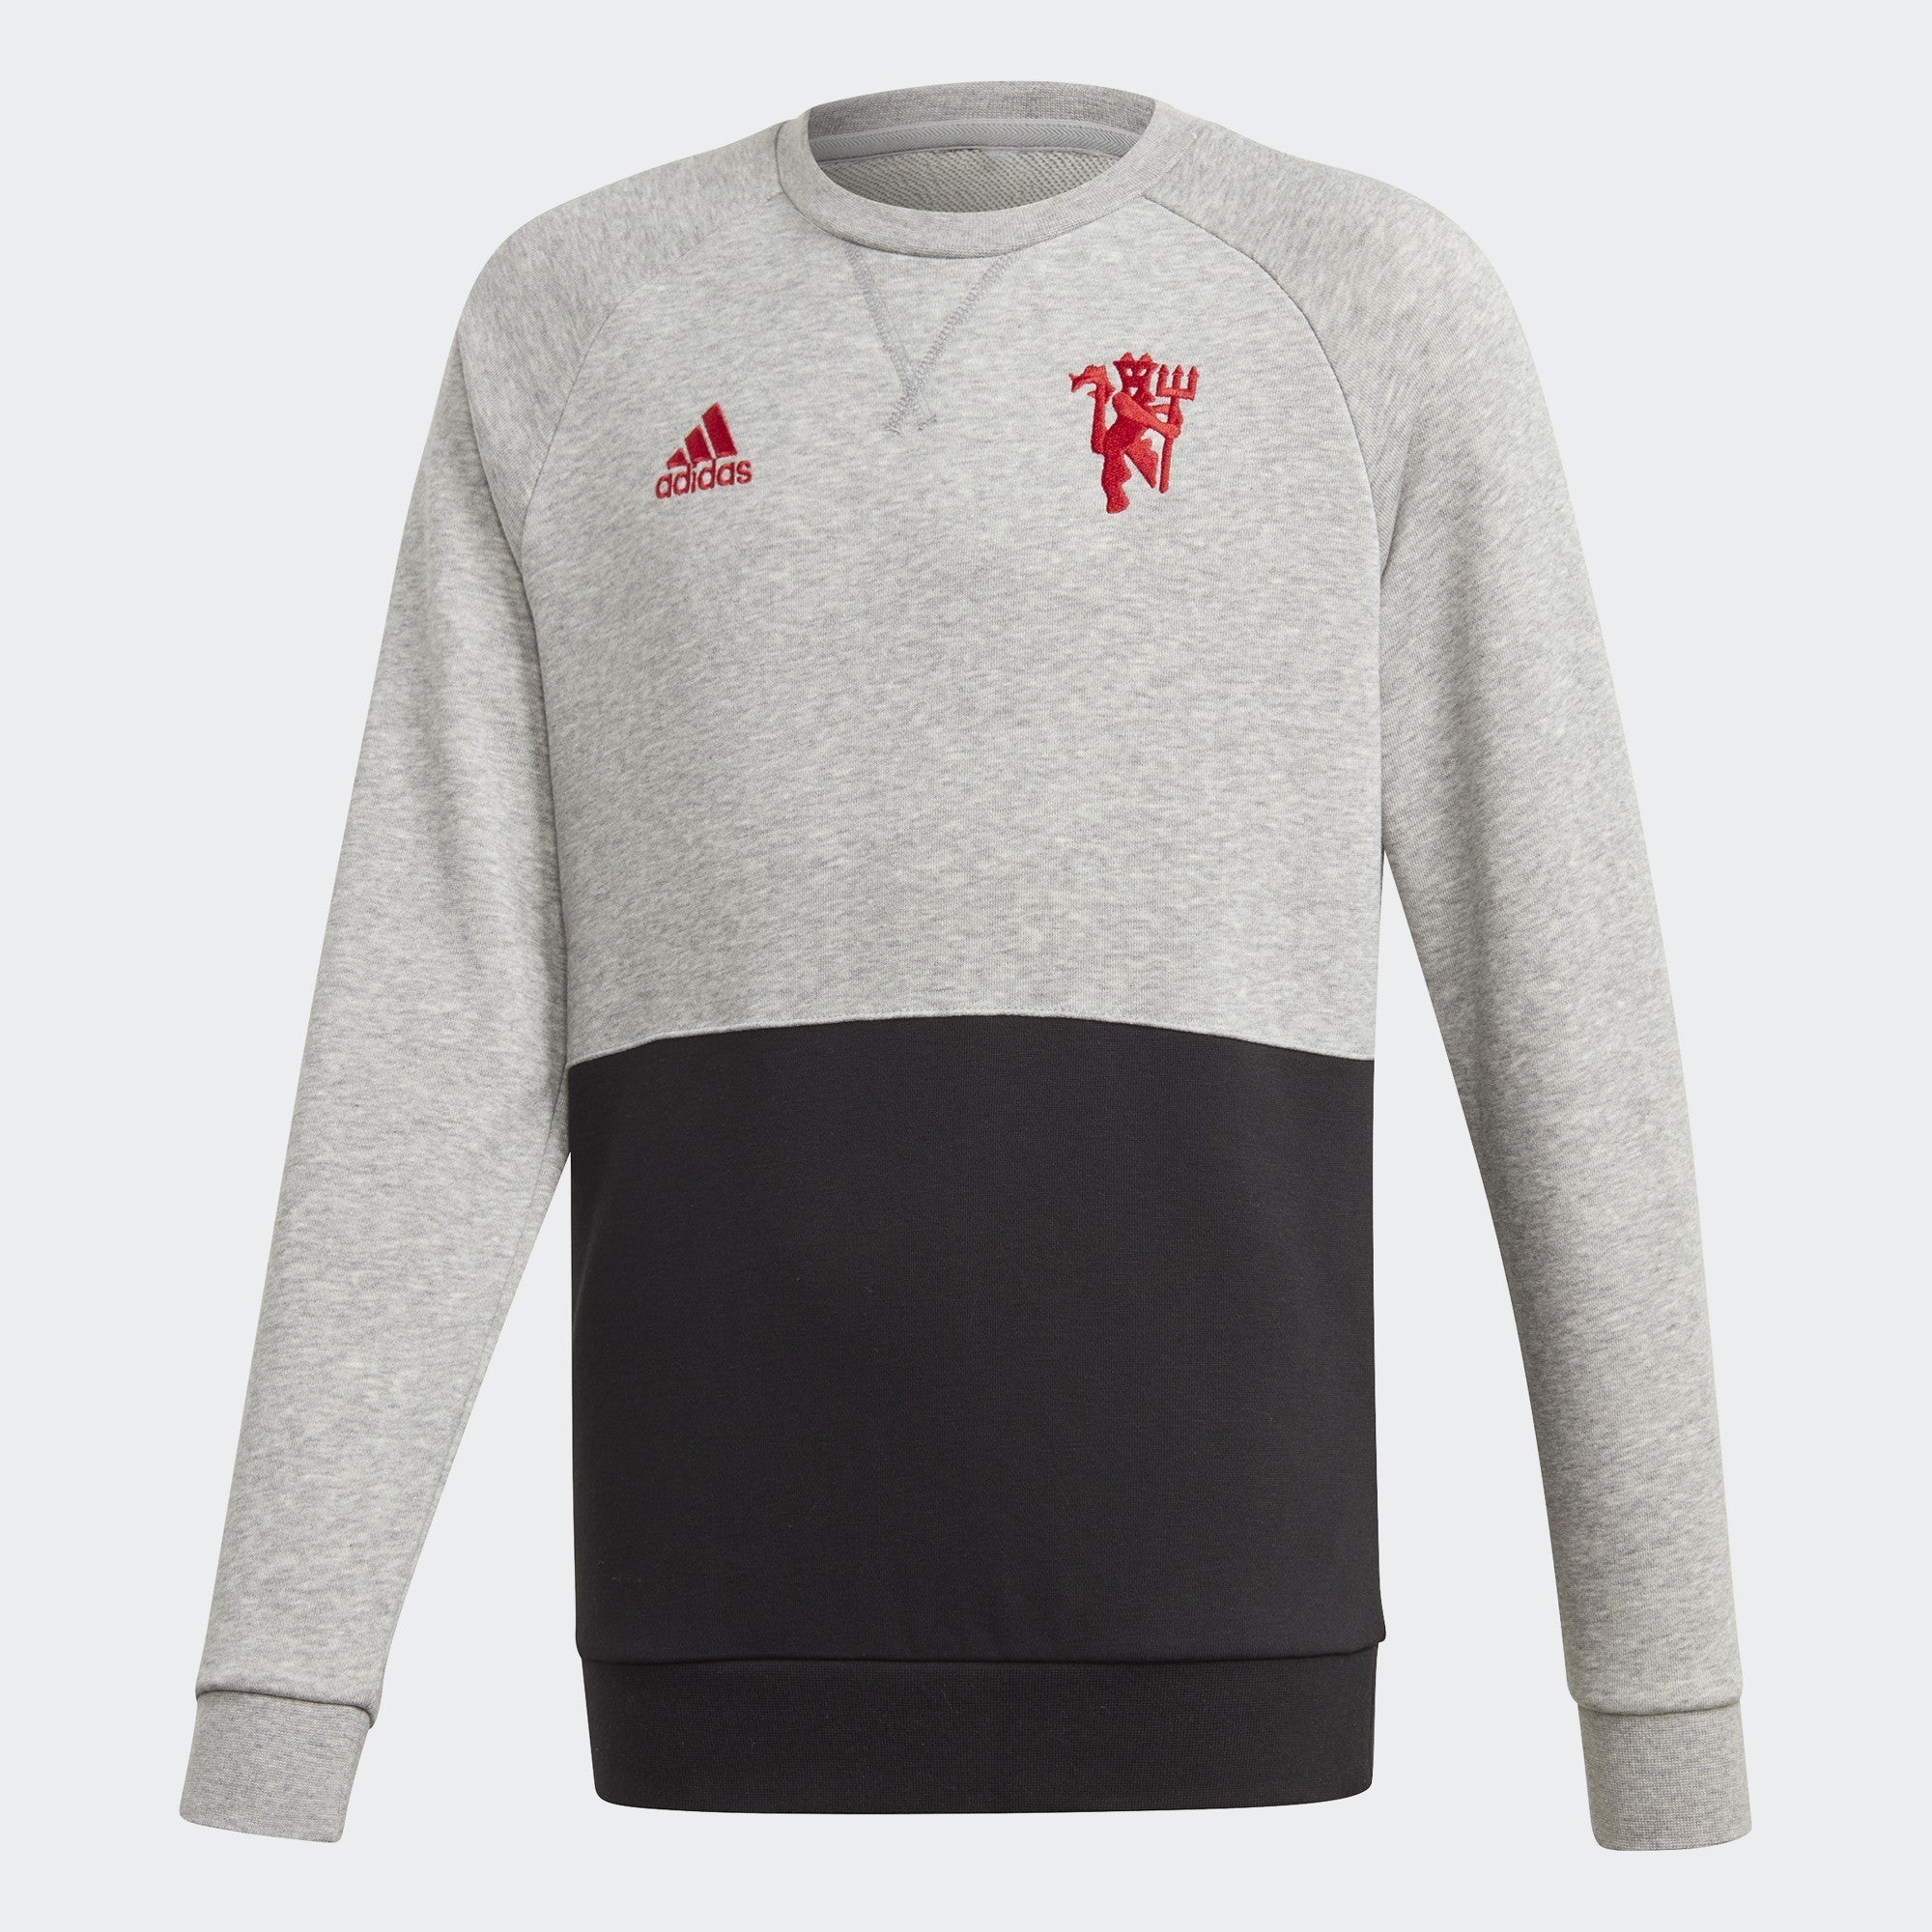 Kid's Manchester United Crew Sweatshirt - Heathered Gray/Black